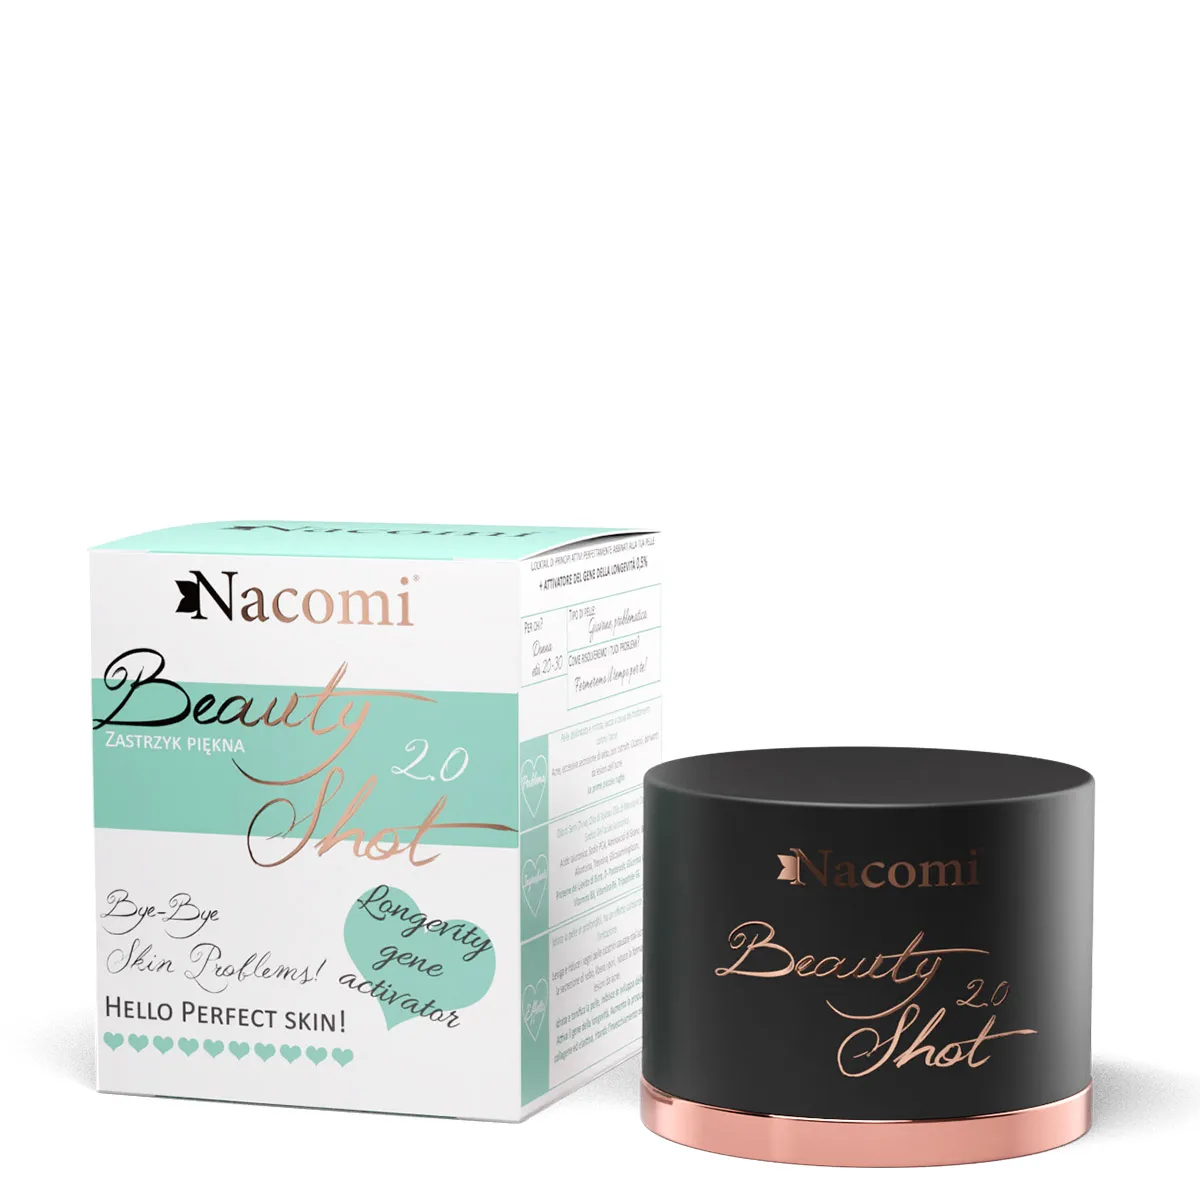 Nacomi, serum krem do twarzy Beauty Shot 2.0, 30 ml 